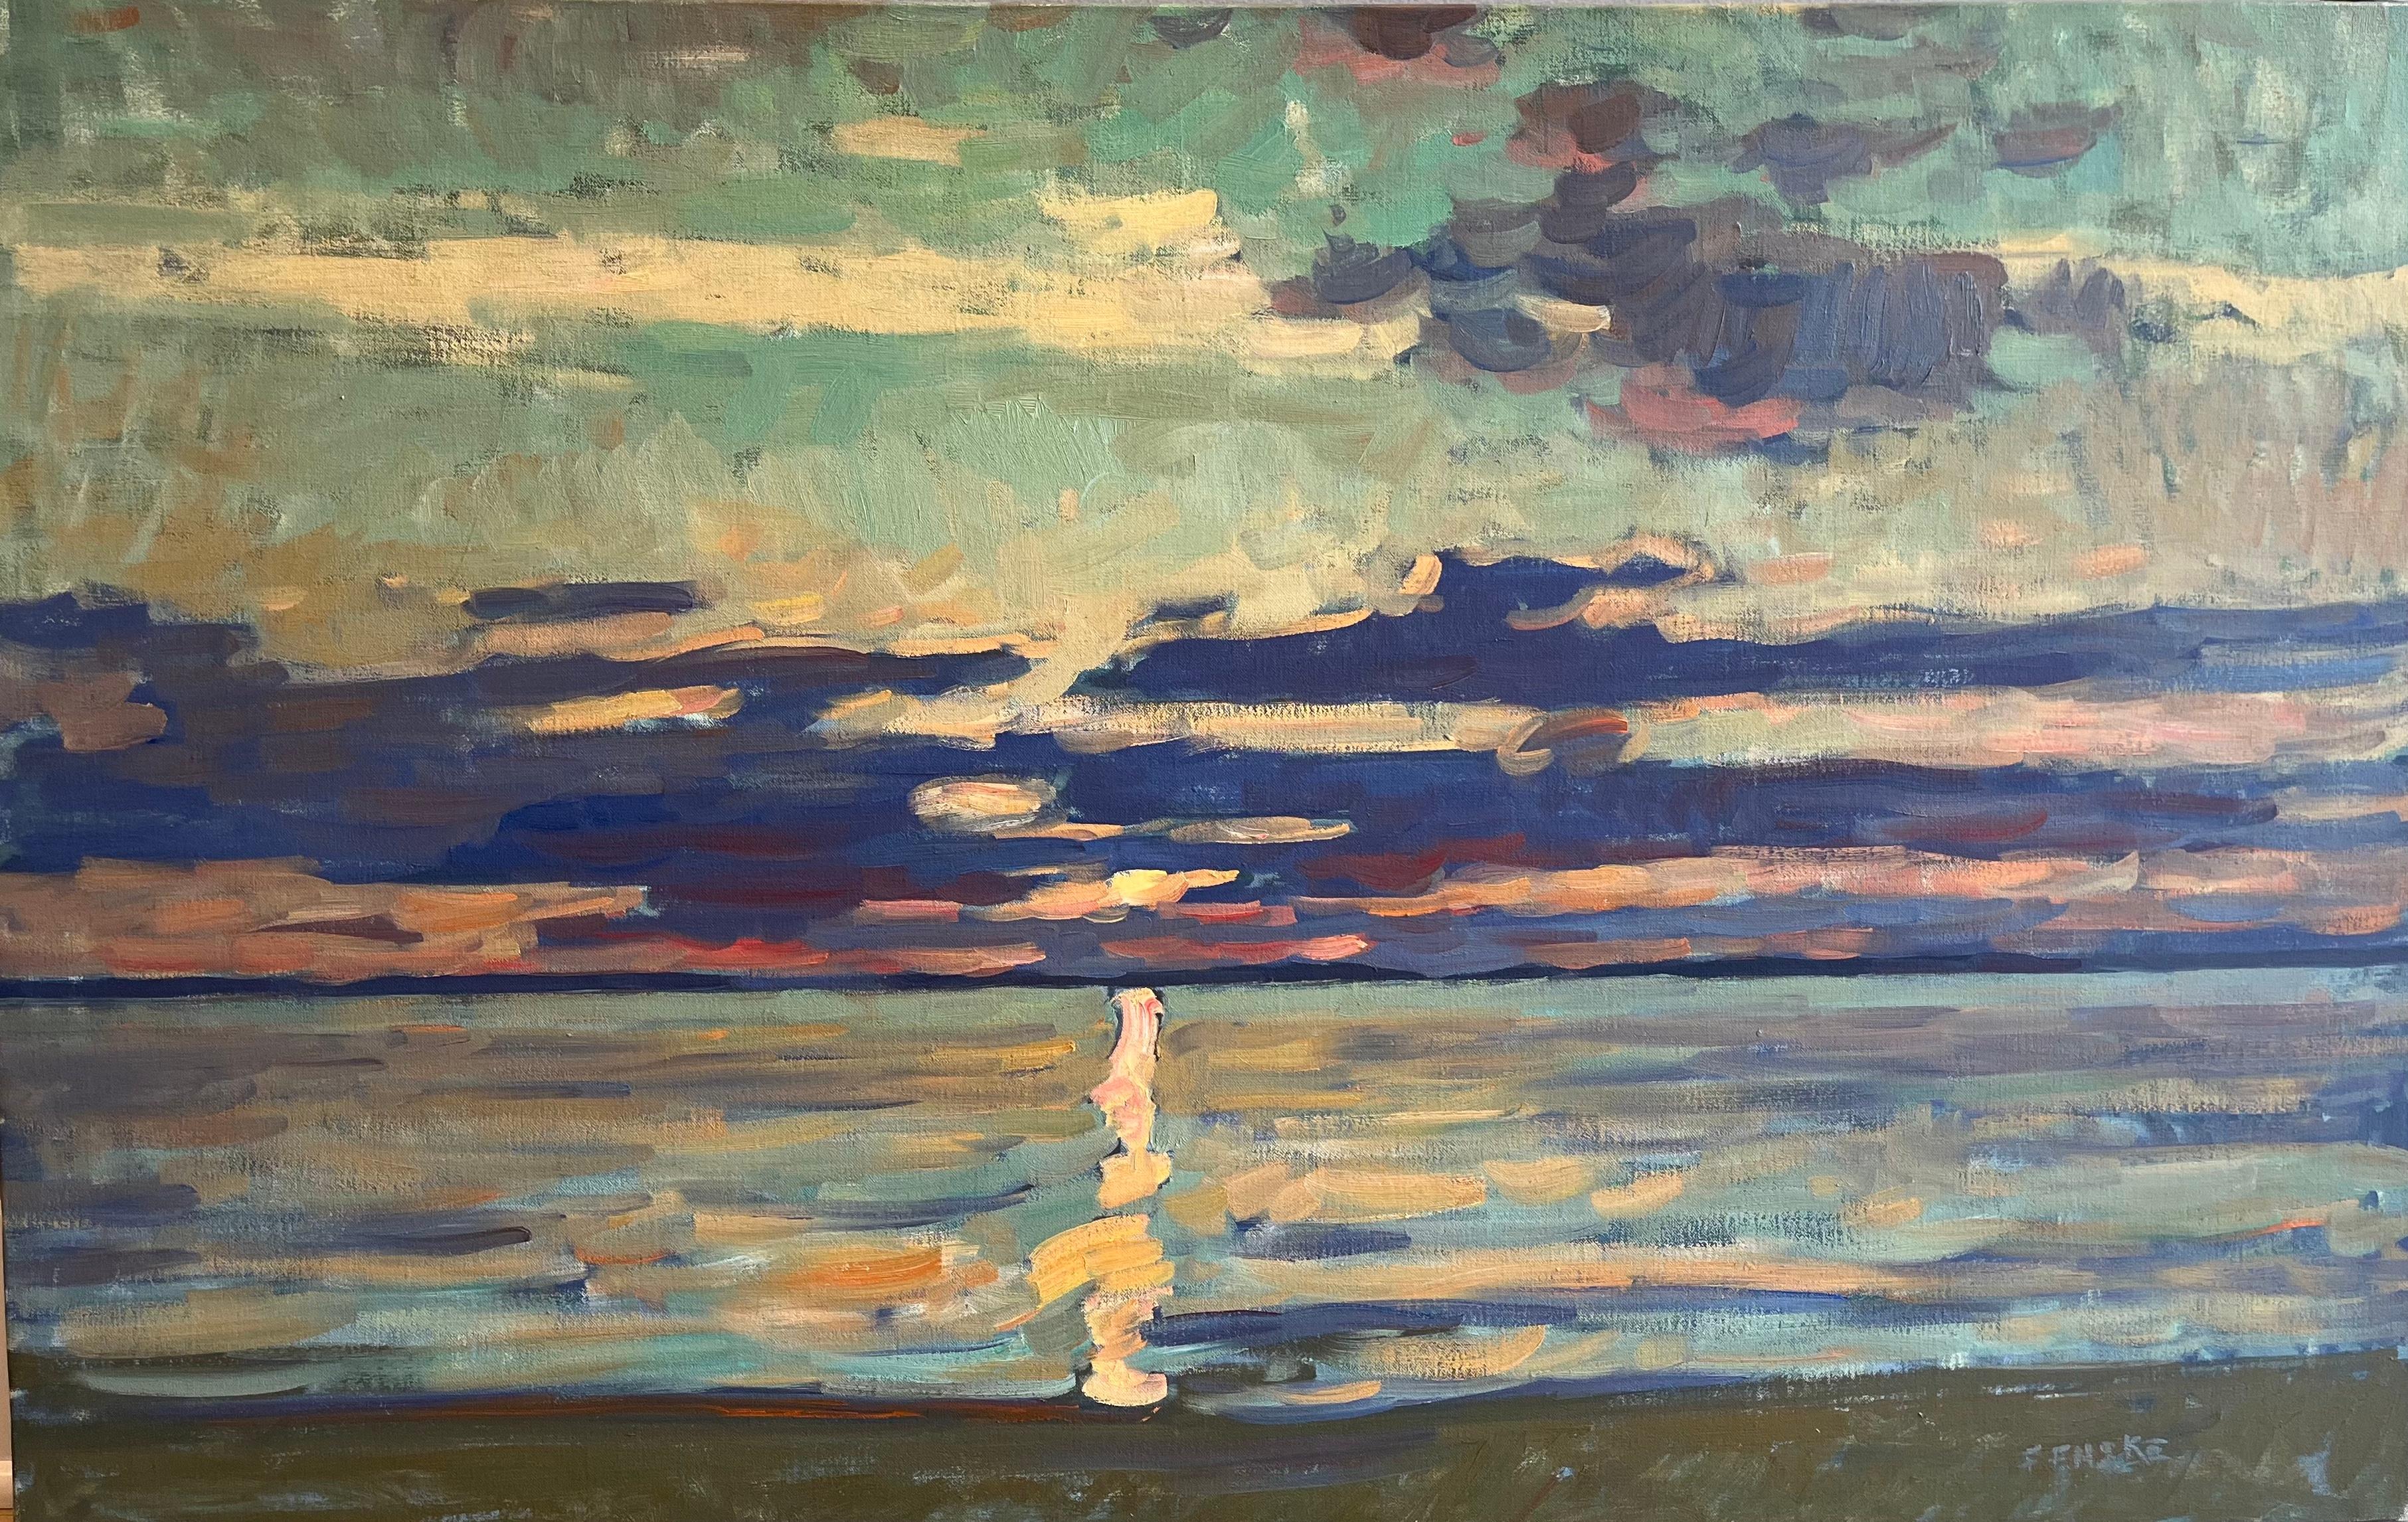 Abstract Painting Ben Fenske - "Violet Horizon II" Paysage marin néo-impressionniste à Long Island, en plein air